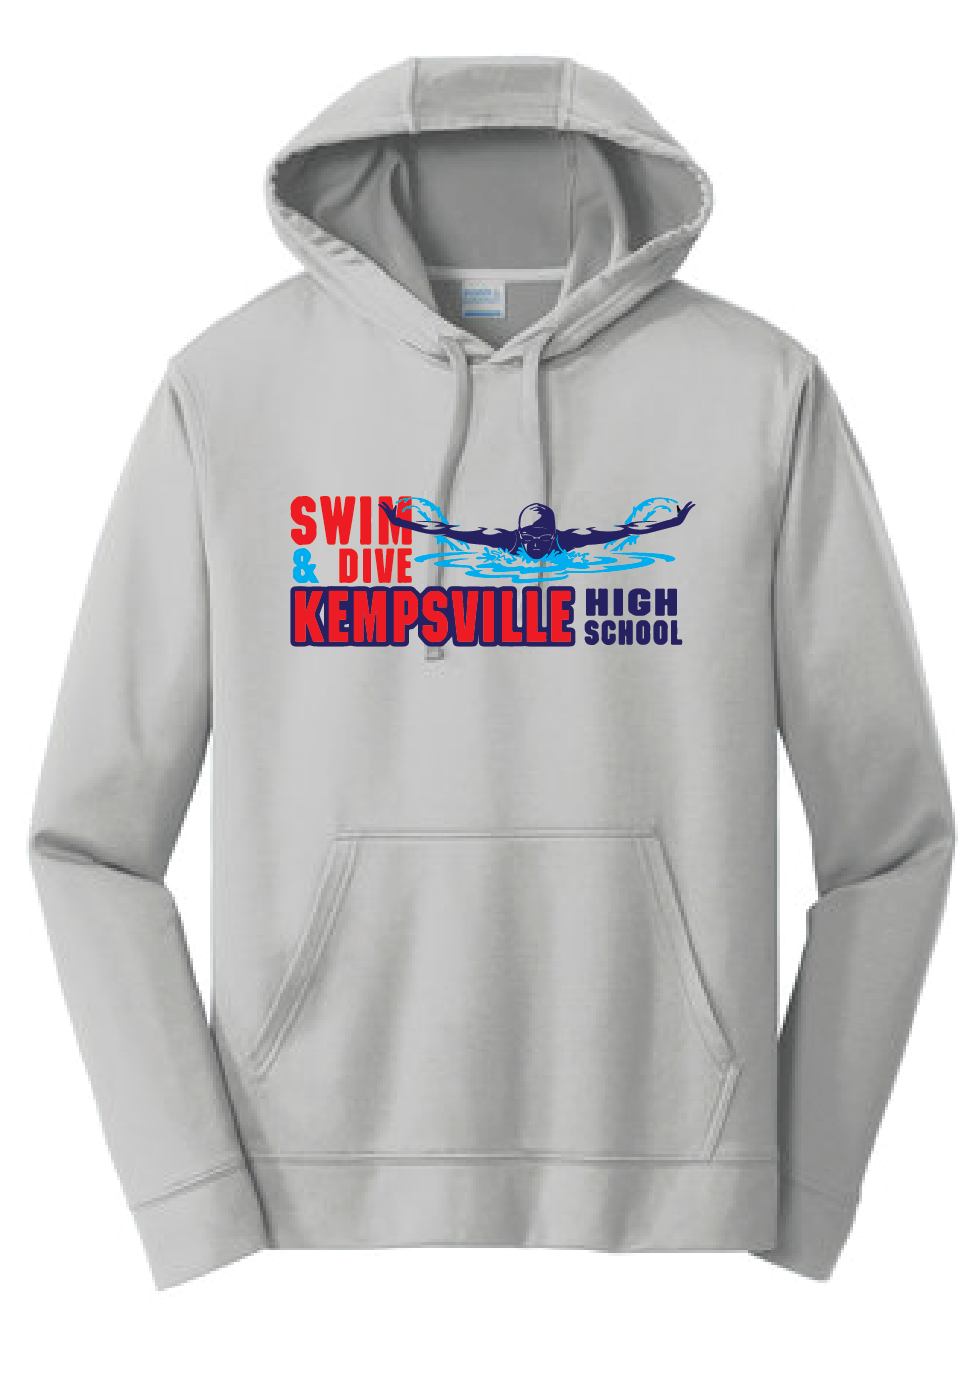 Performance Fleece Pullover Hooded Sweatshirt / Silver / Kempsville High School Swim & Dive Team